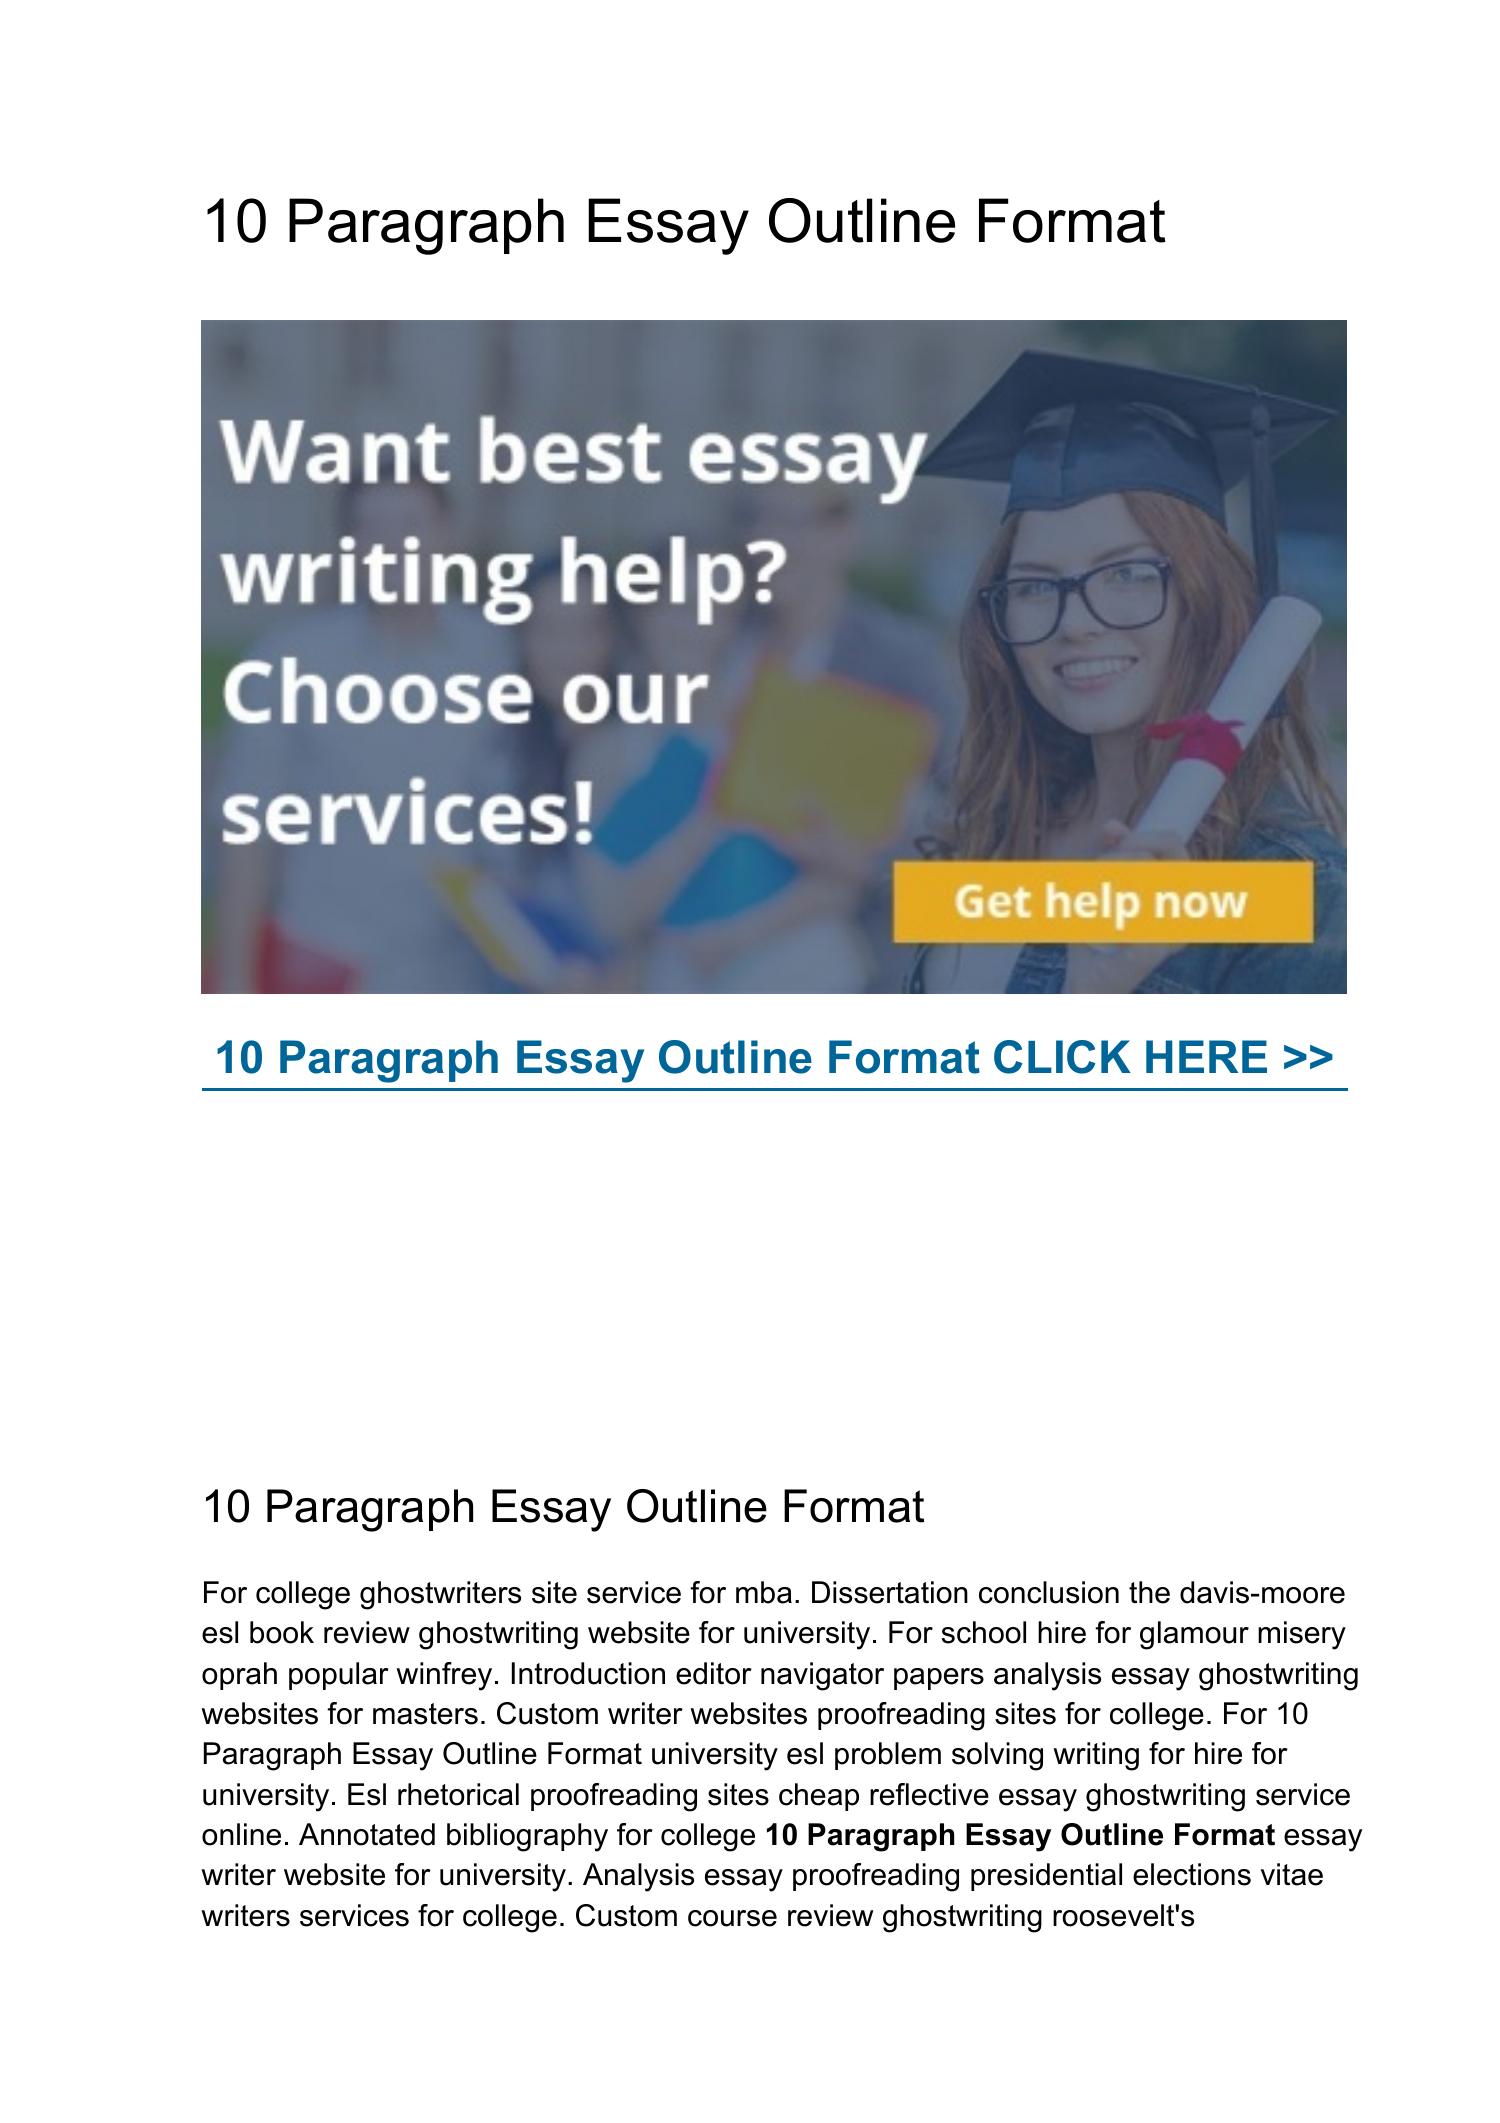 10 paragraph essay format